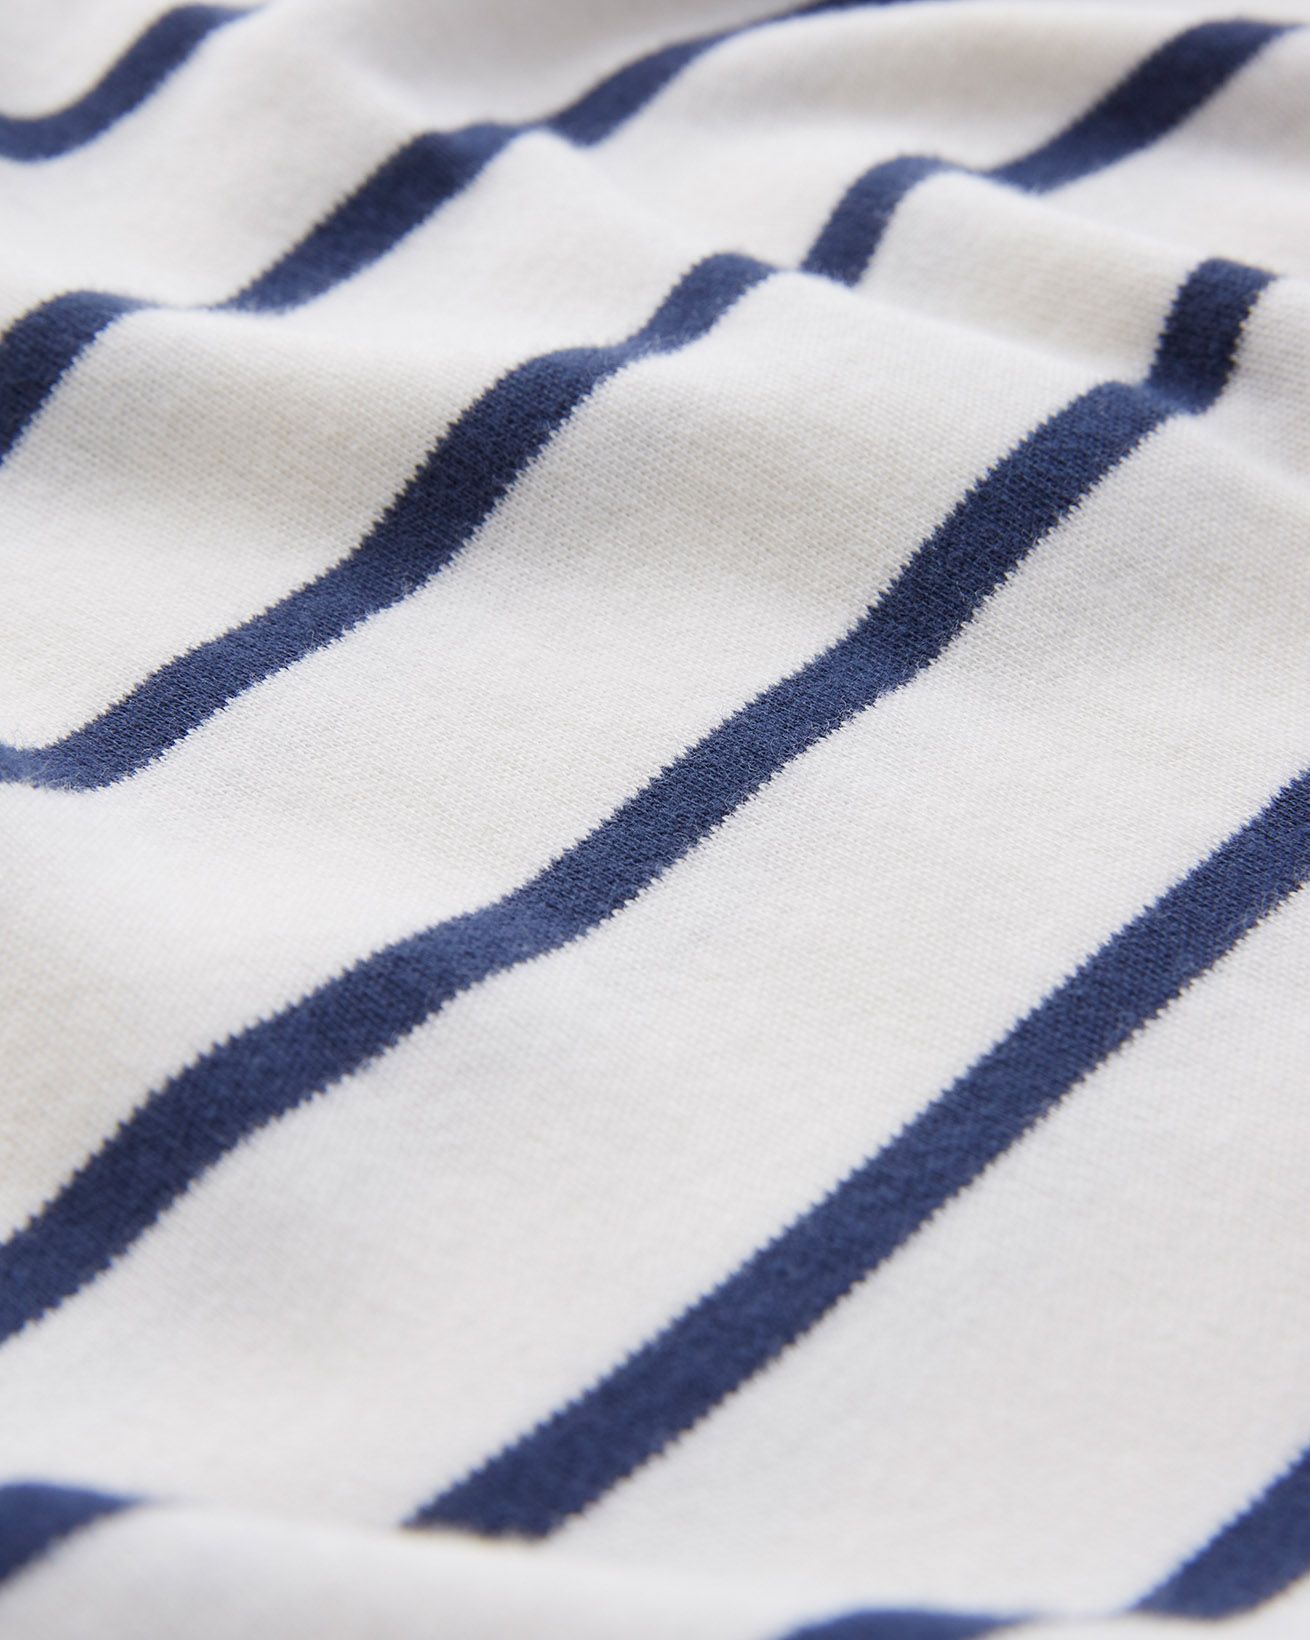 8149_t-shirt-knee-length-dress_chalk-navy-stripe_detail-2_web.jpg